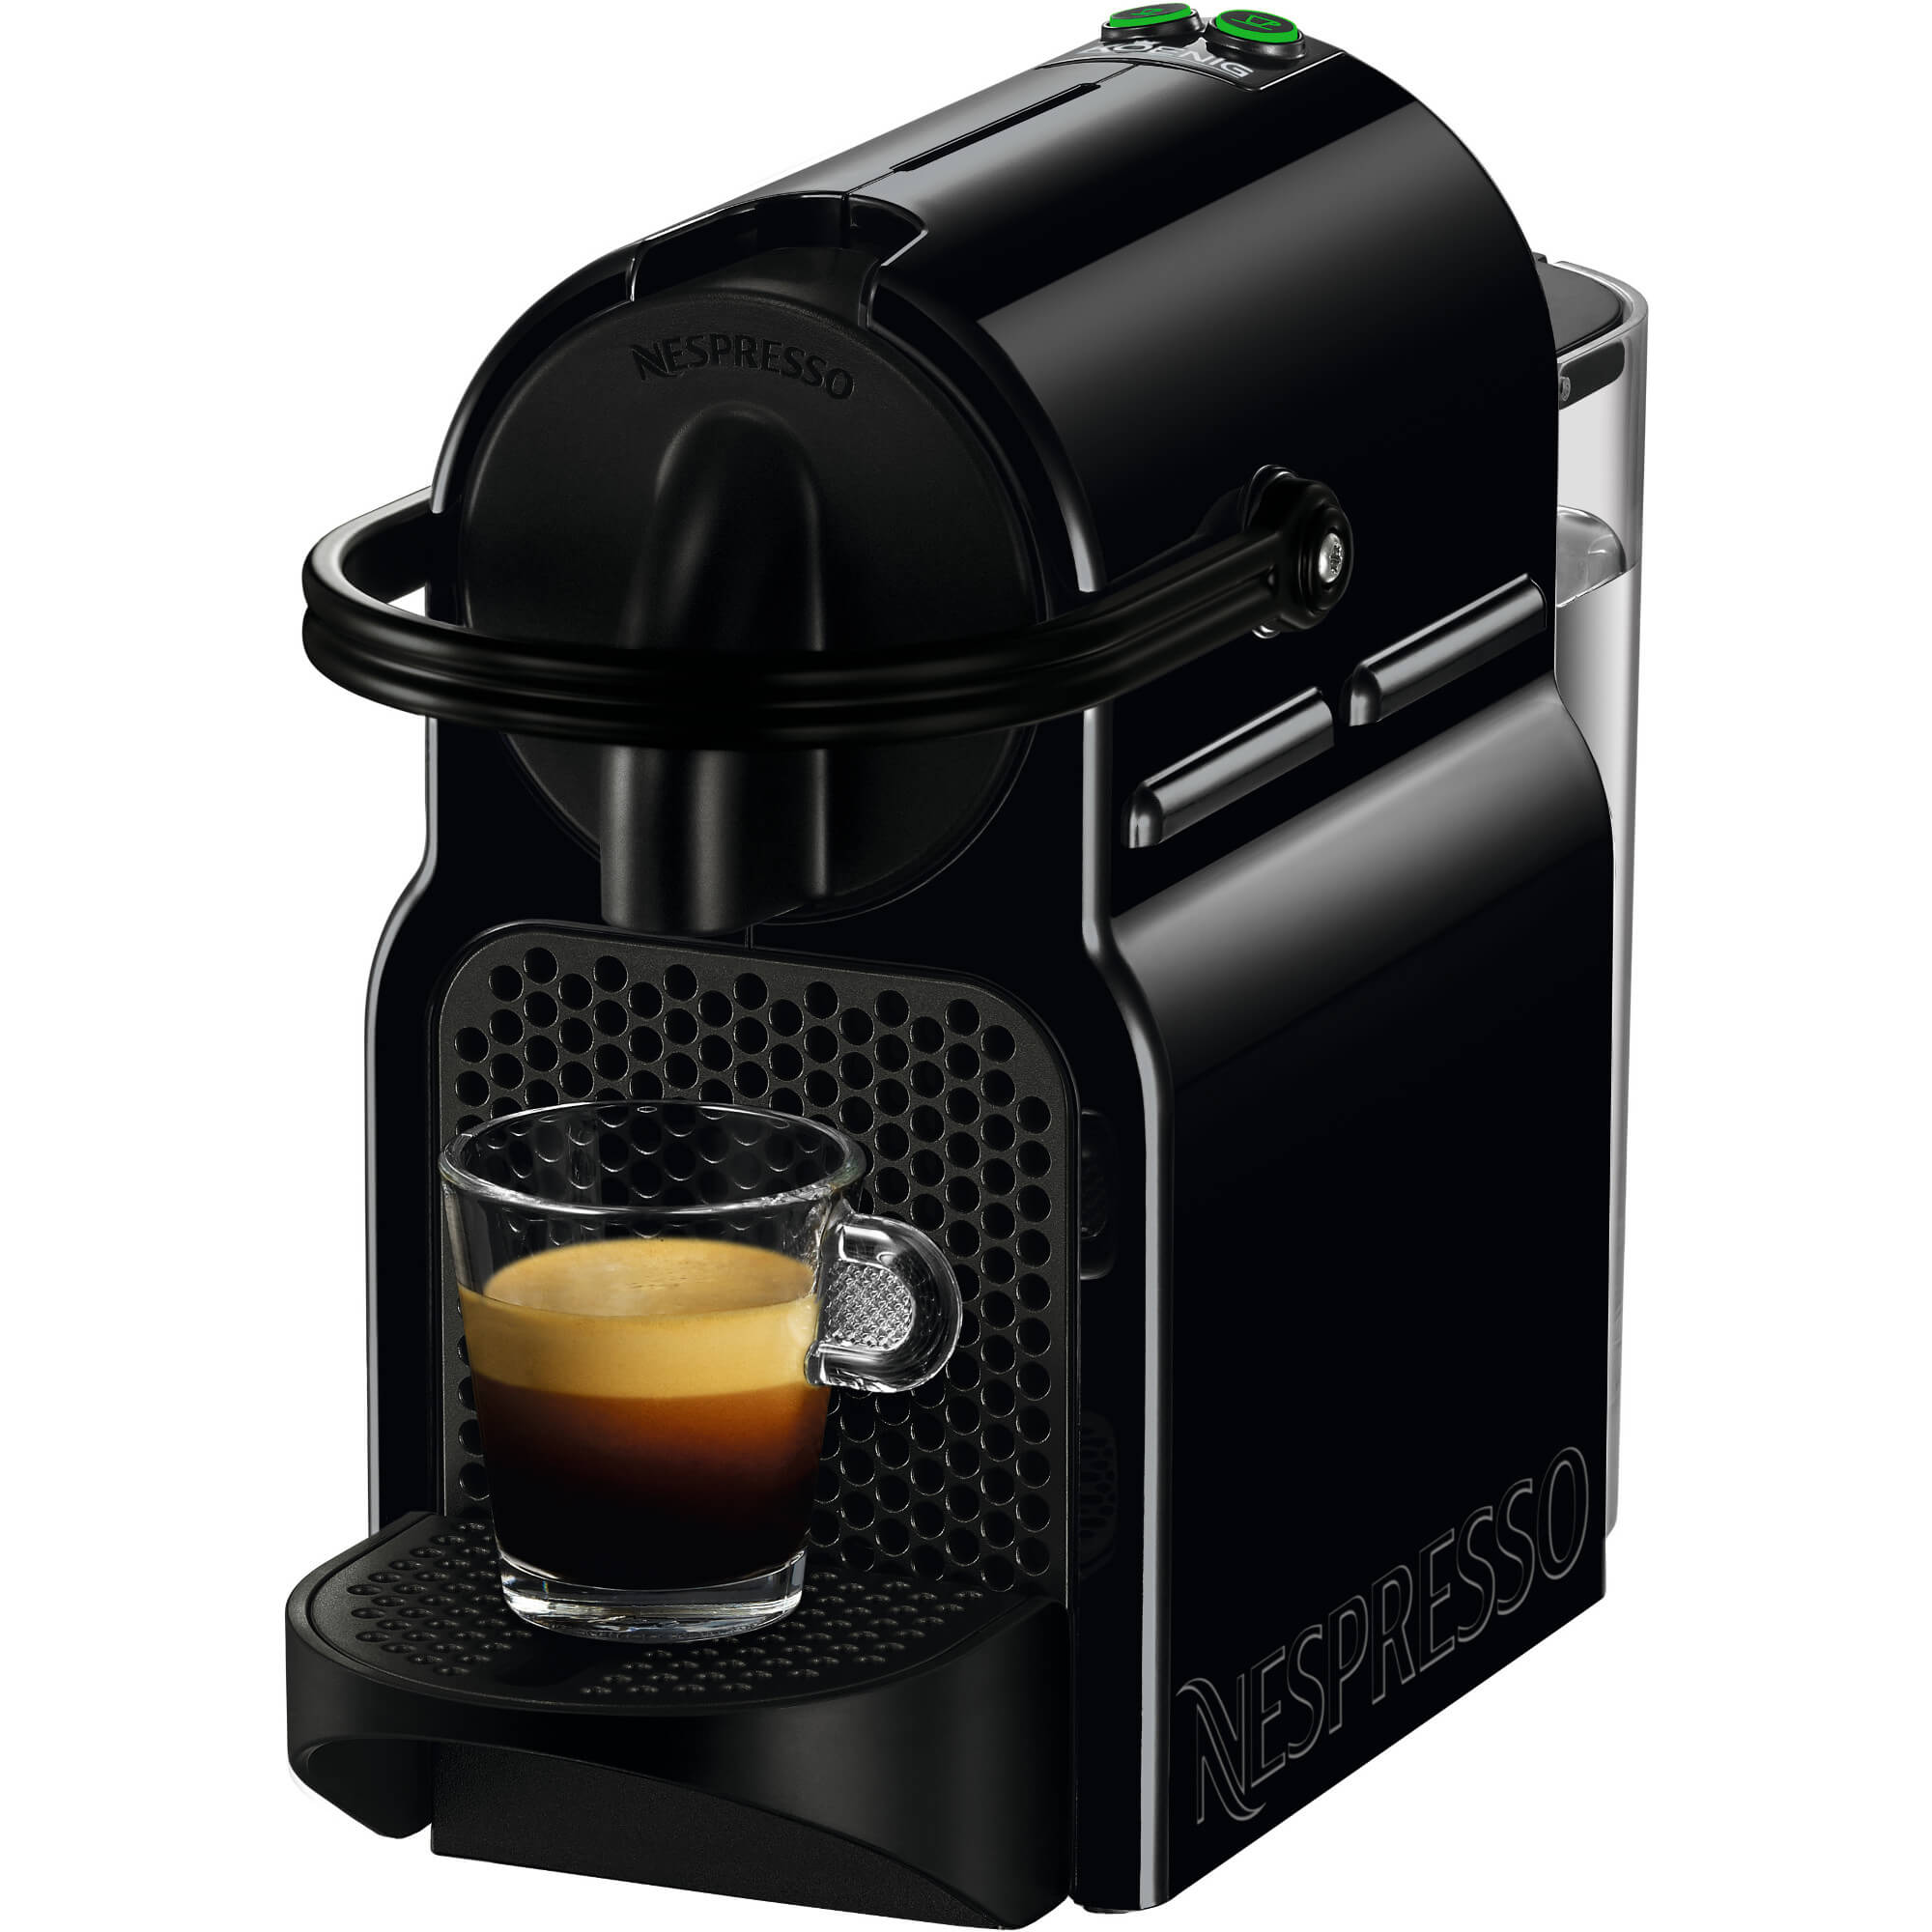 Espressor Nespresso Inissia D40, 1260 W, 0.7 L, 19 bar, Negru